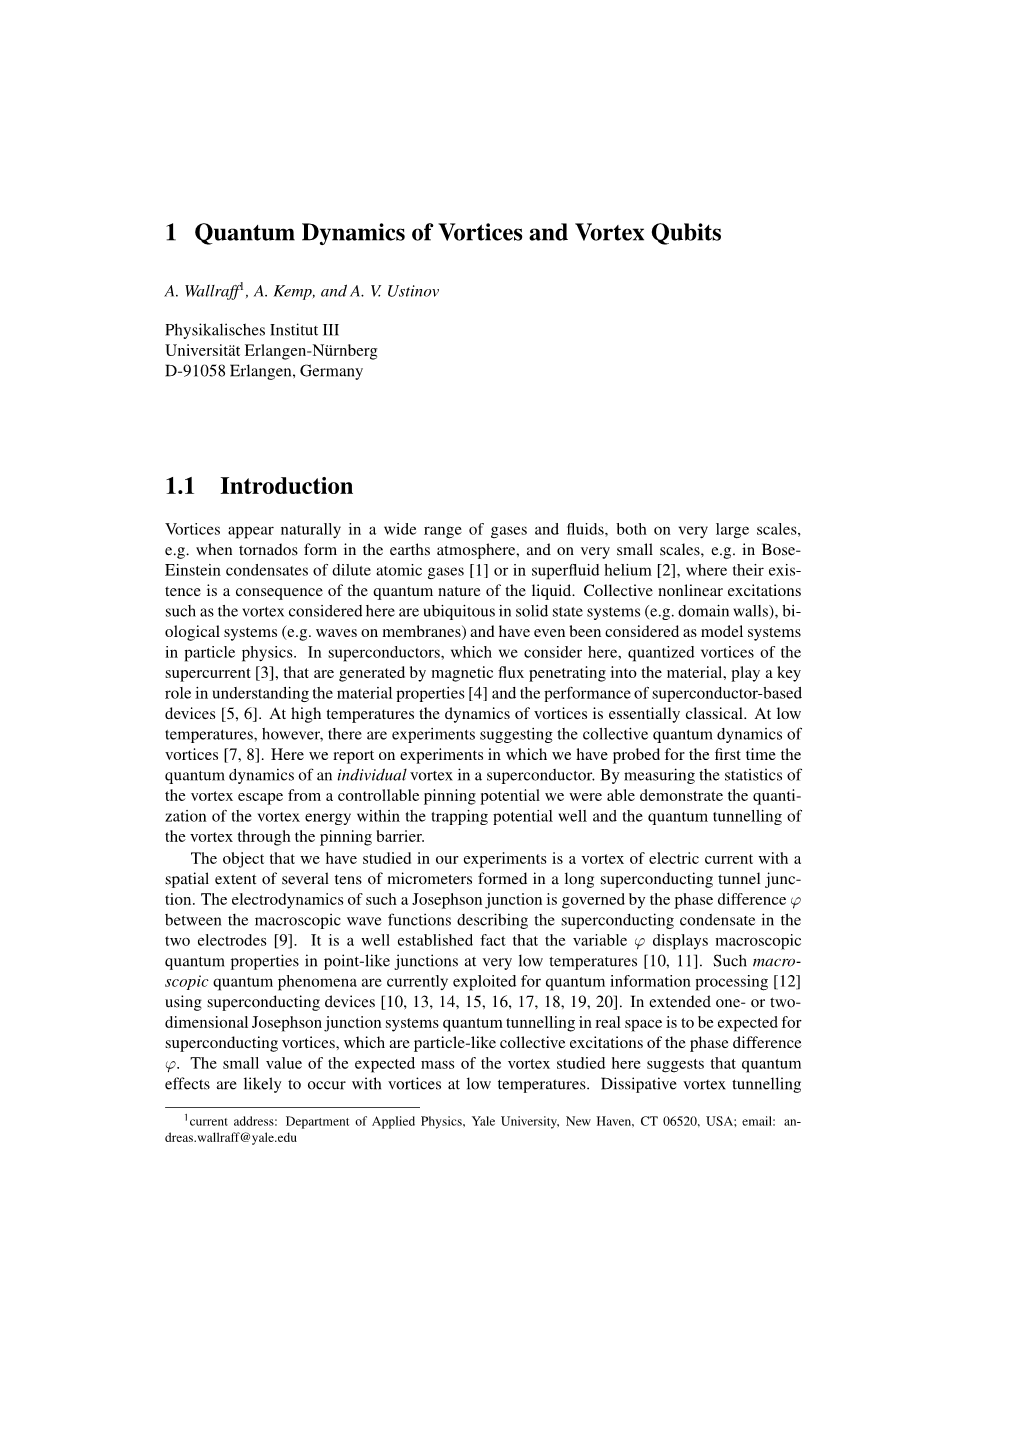 1 Quantum Dynamics of Vortices and Vortex Qubits 1.1 Introduction